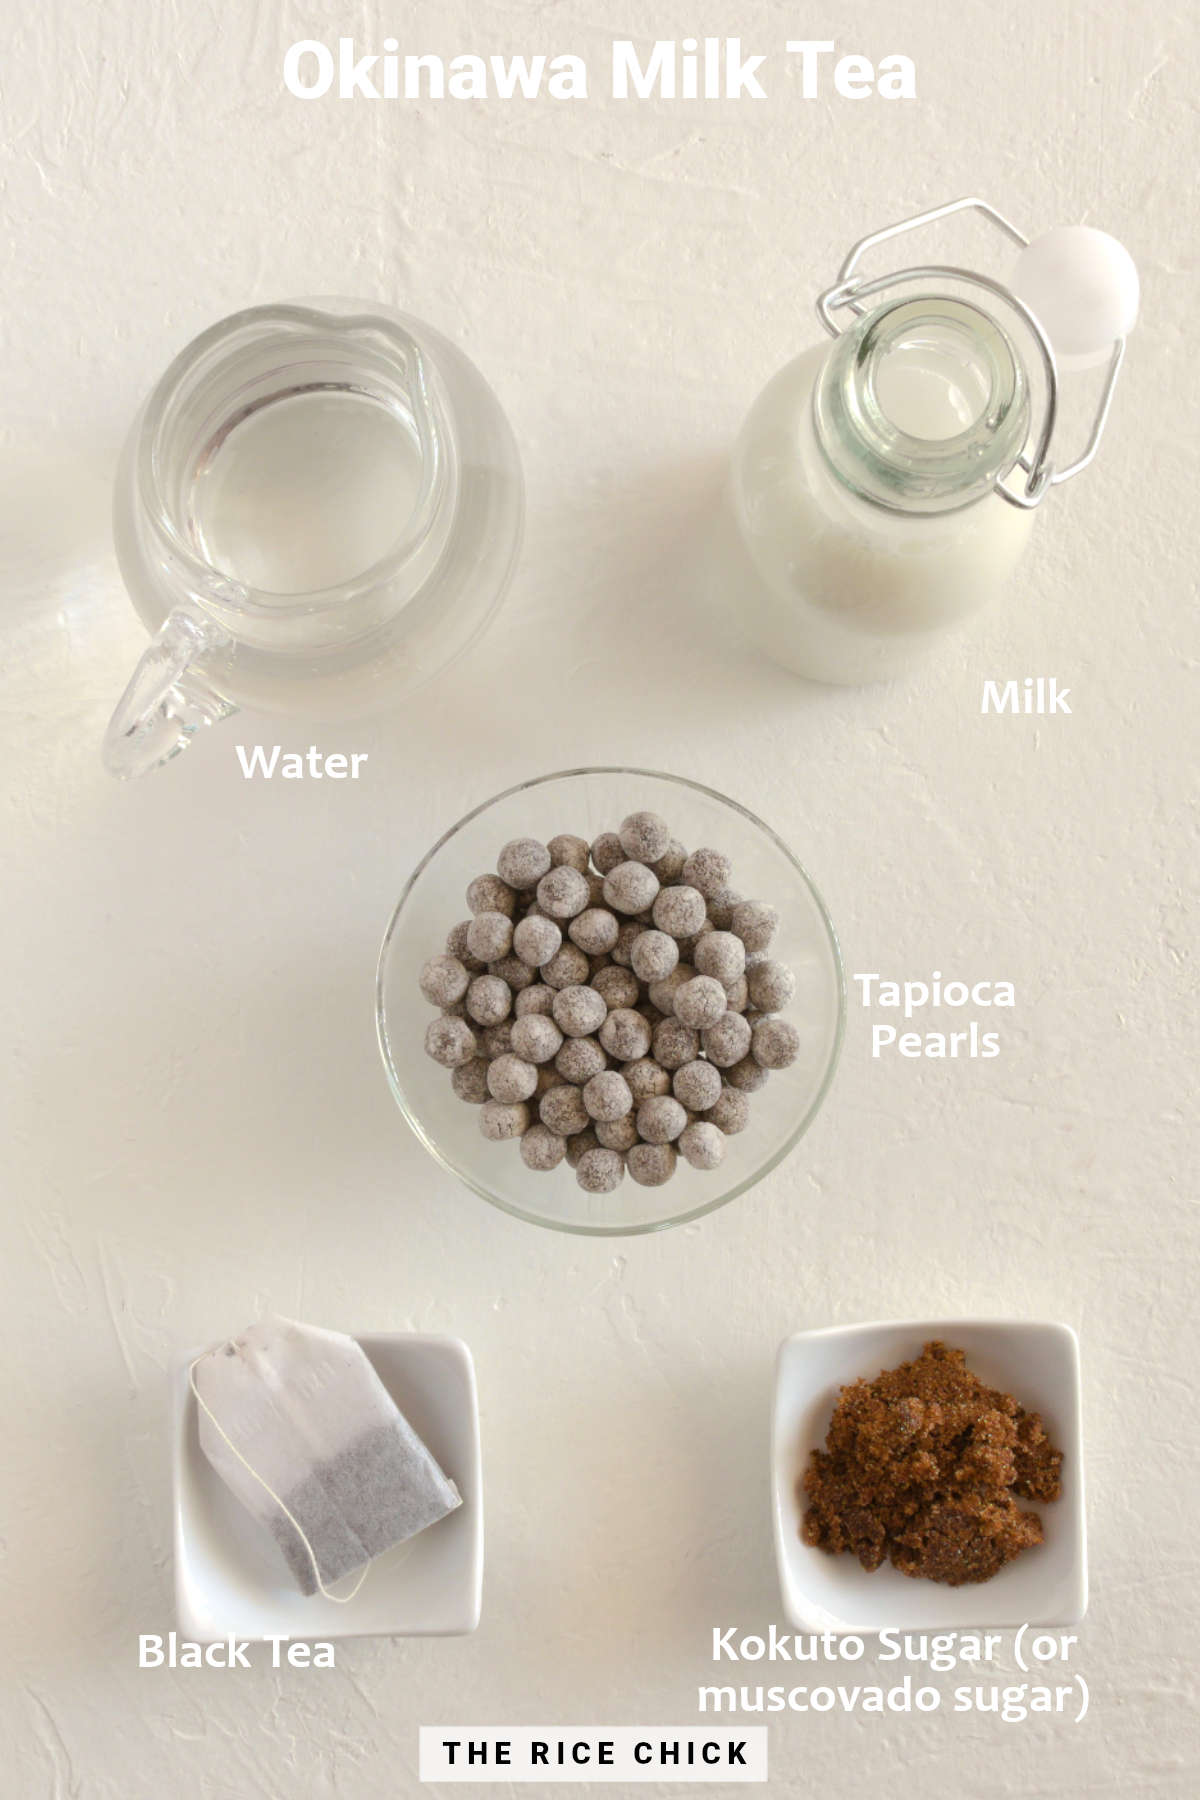 Ingredients for Okinawa milk tea.